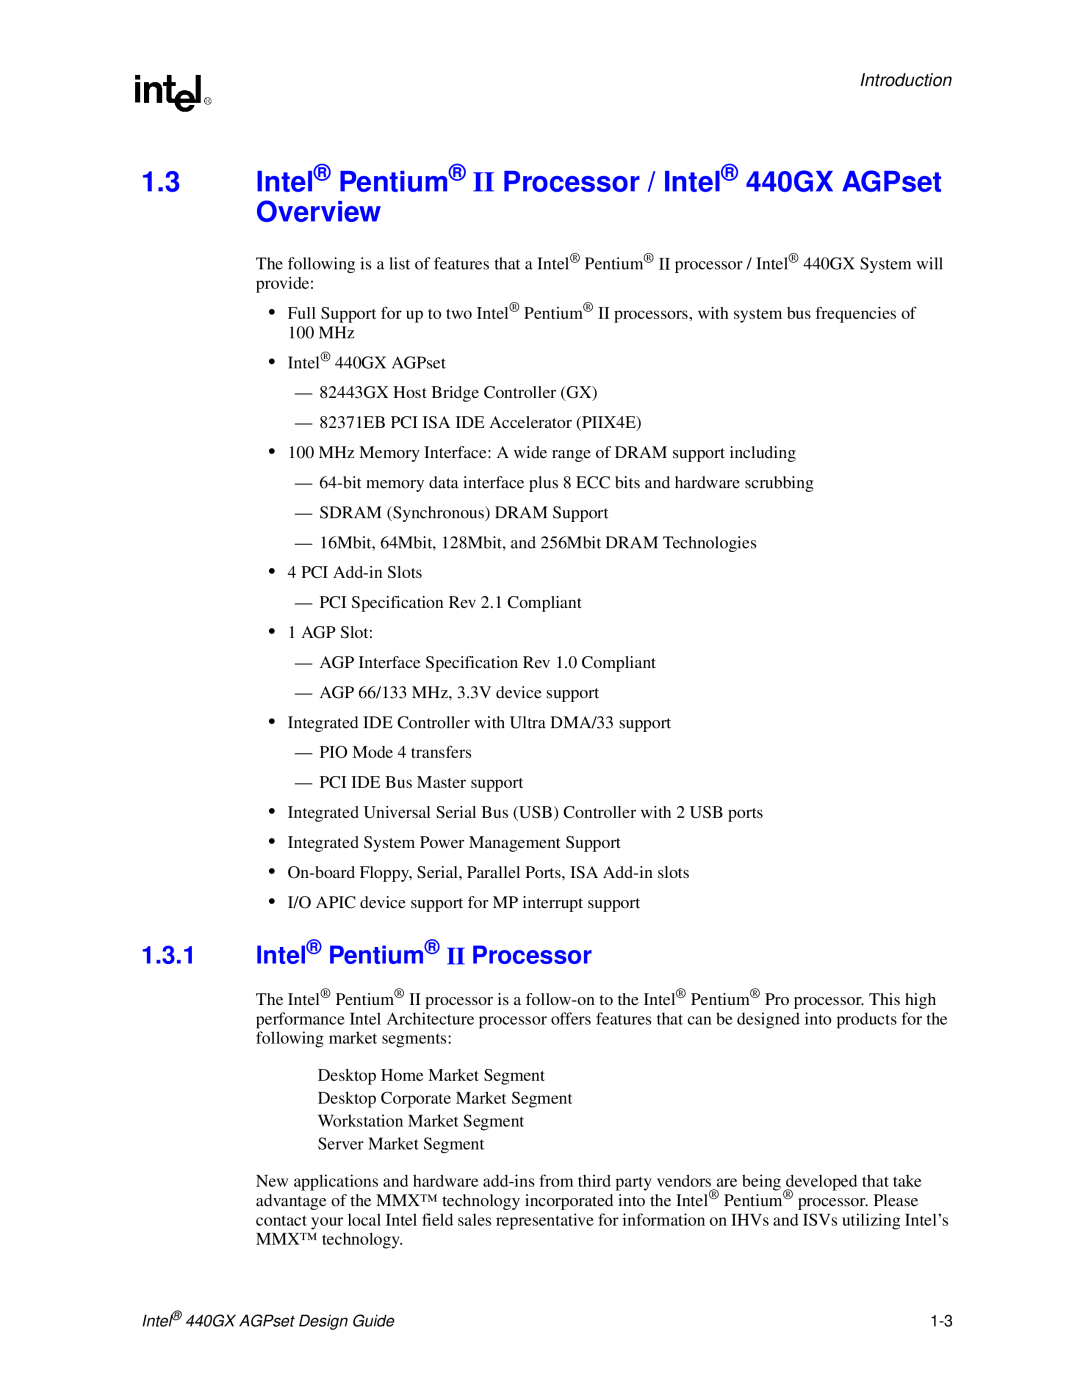 Intel manual Intel Pentium II Processor / Intel 440GX AGPset Overview, Introduction 